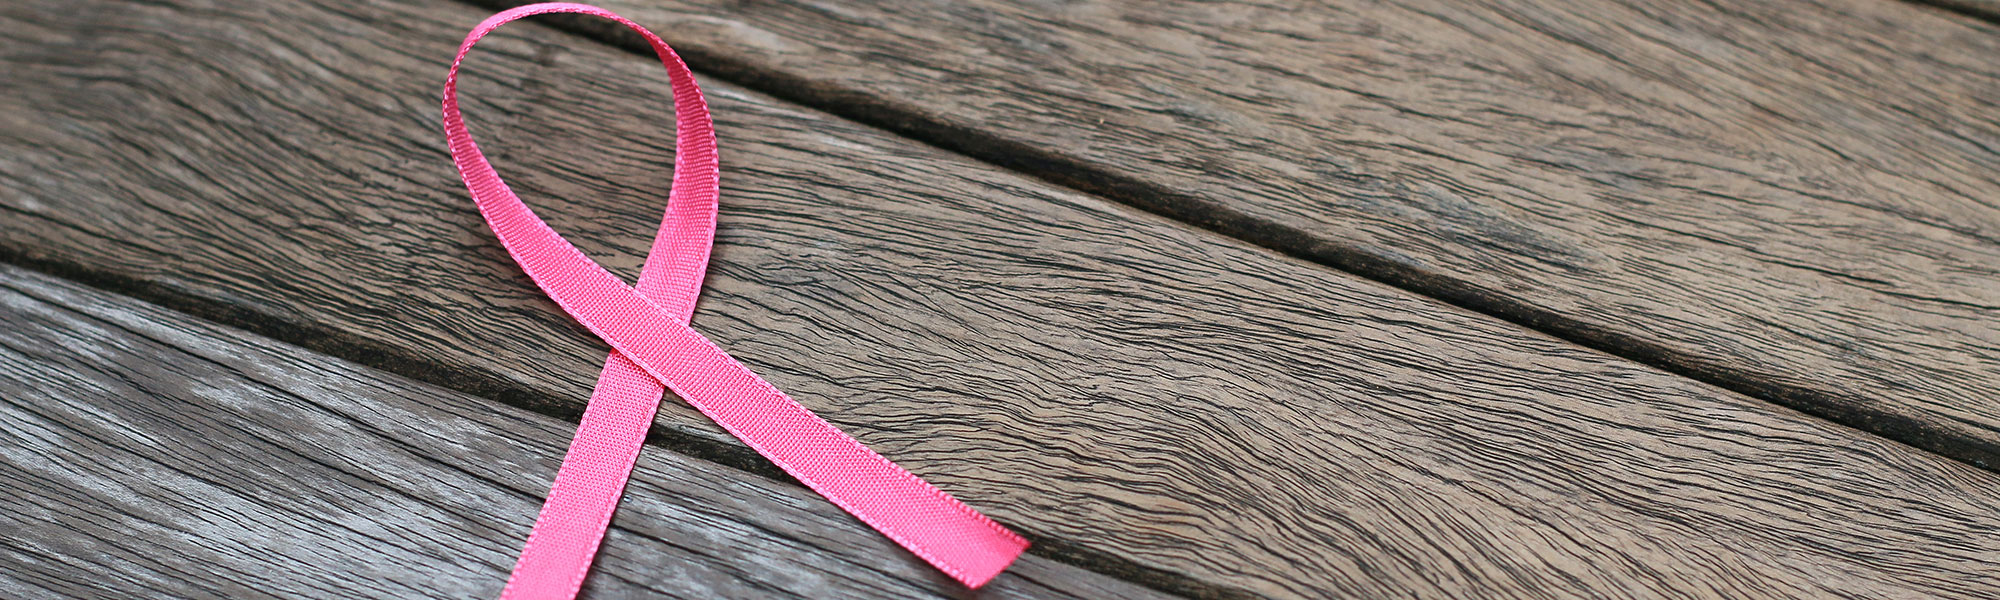 Breast cancer awareness ribbon laying on wood grain